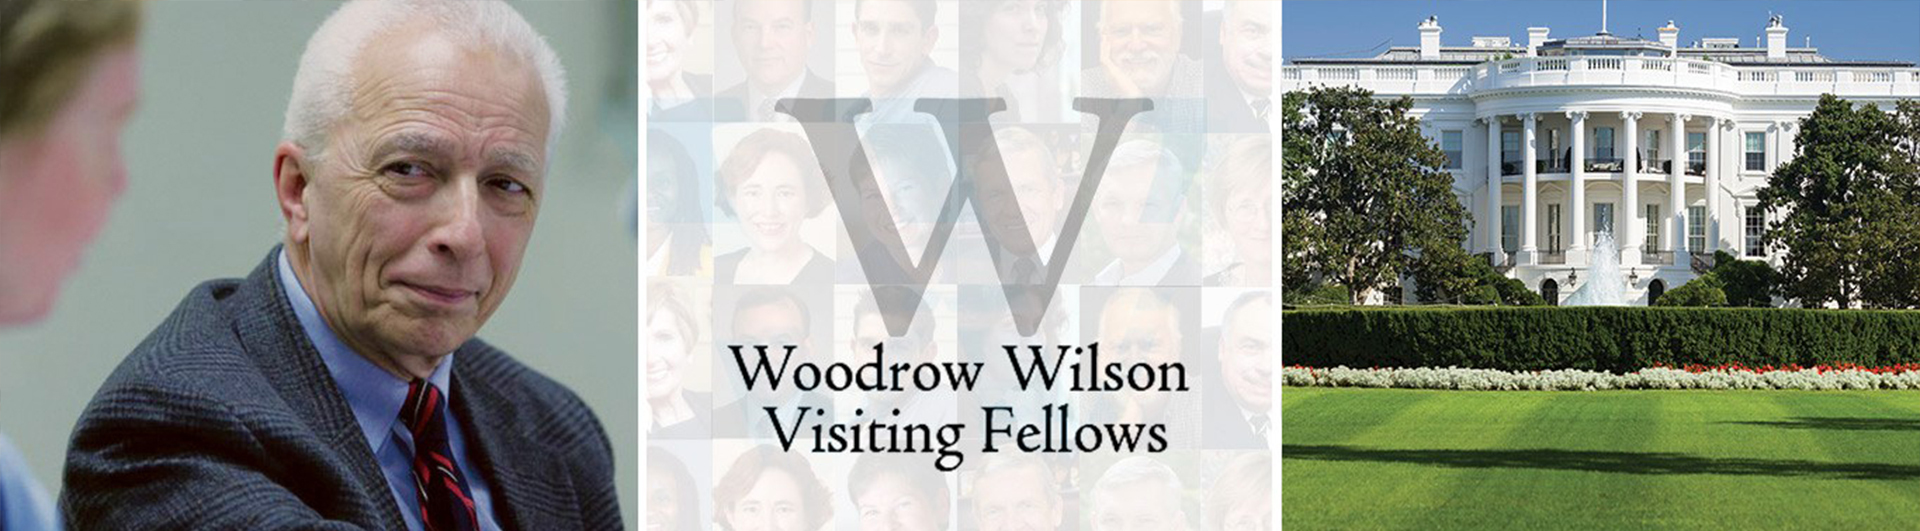 Woodrow Wilson Visiting Fellow Richard Benedetto.